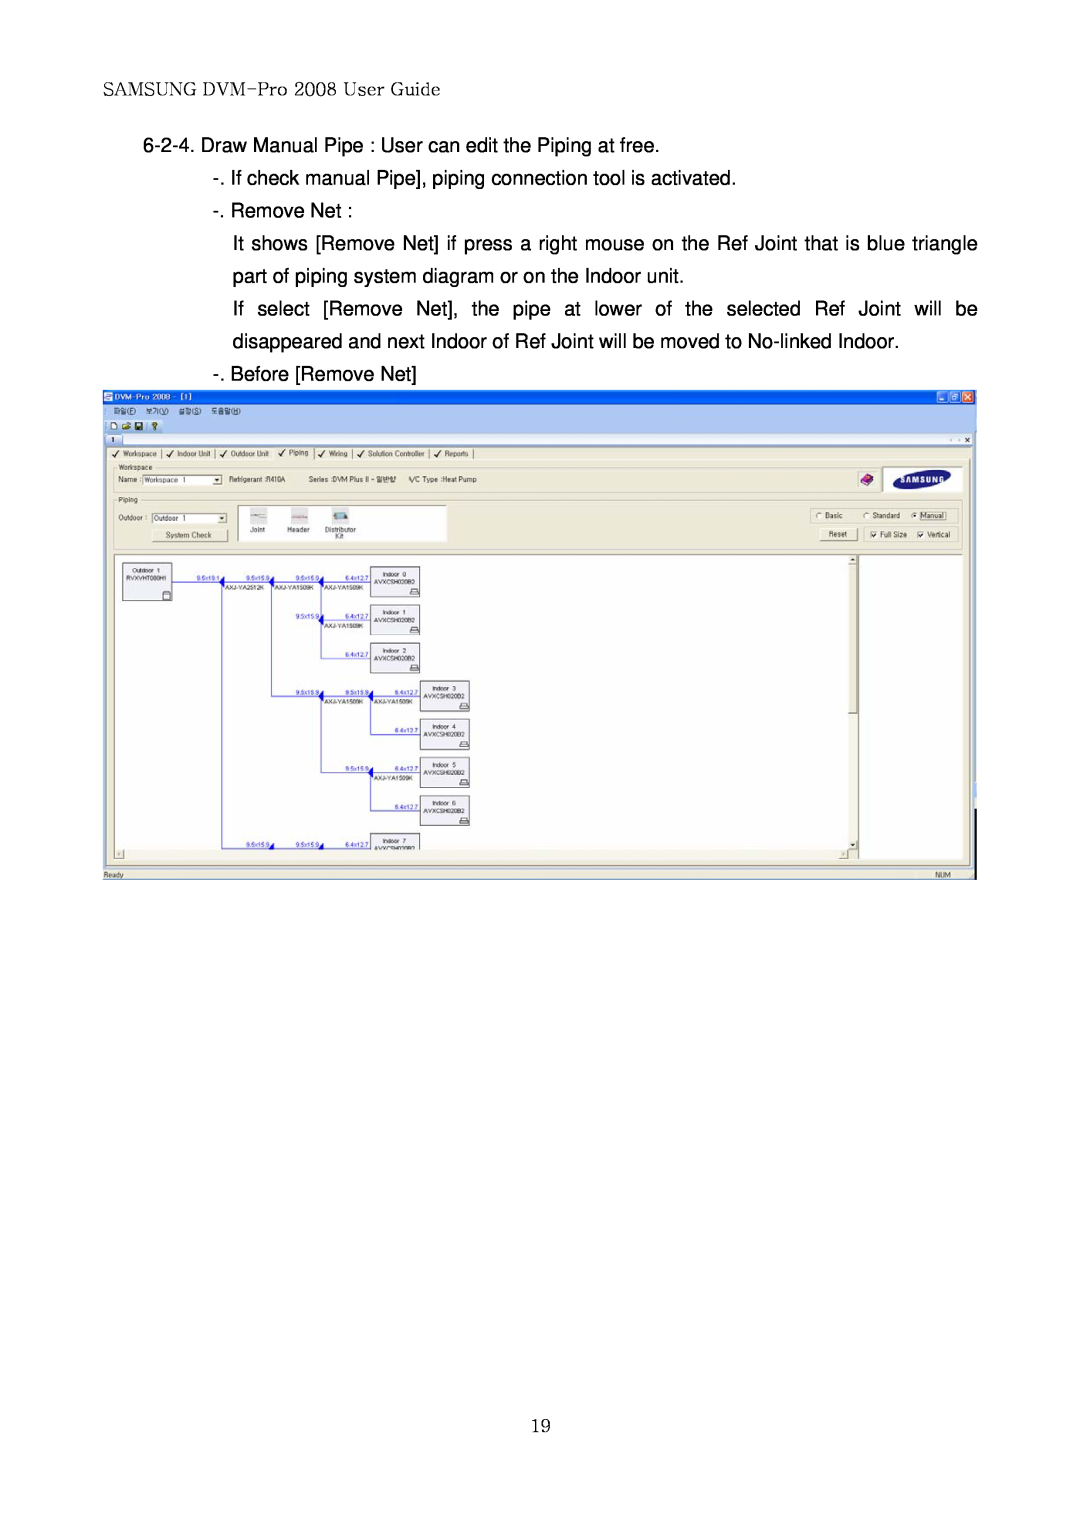 Samsung DVM-PRO 2008 user manual Before Remove Net 